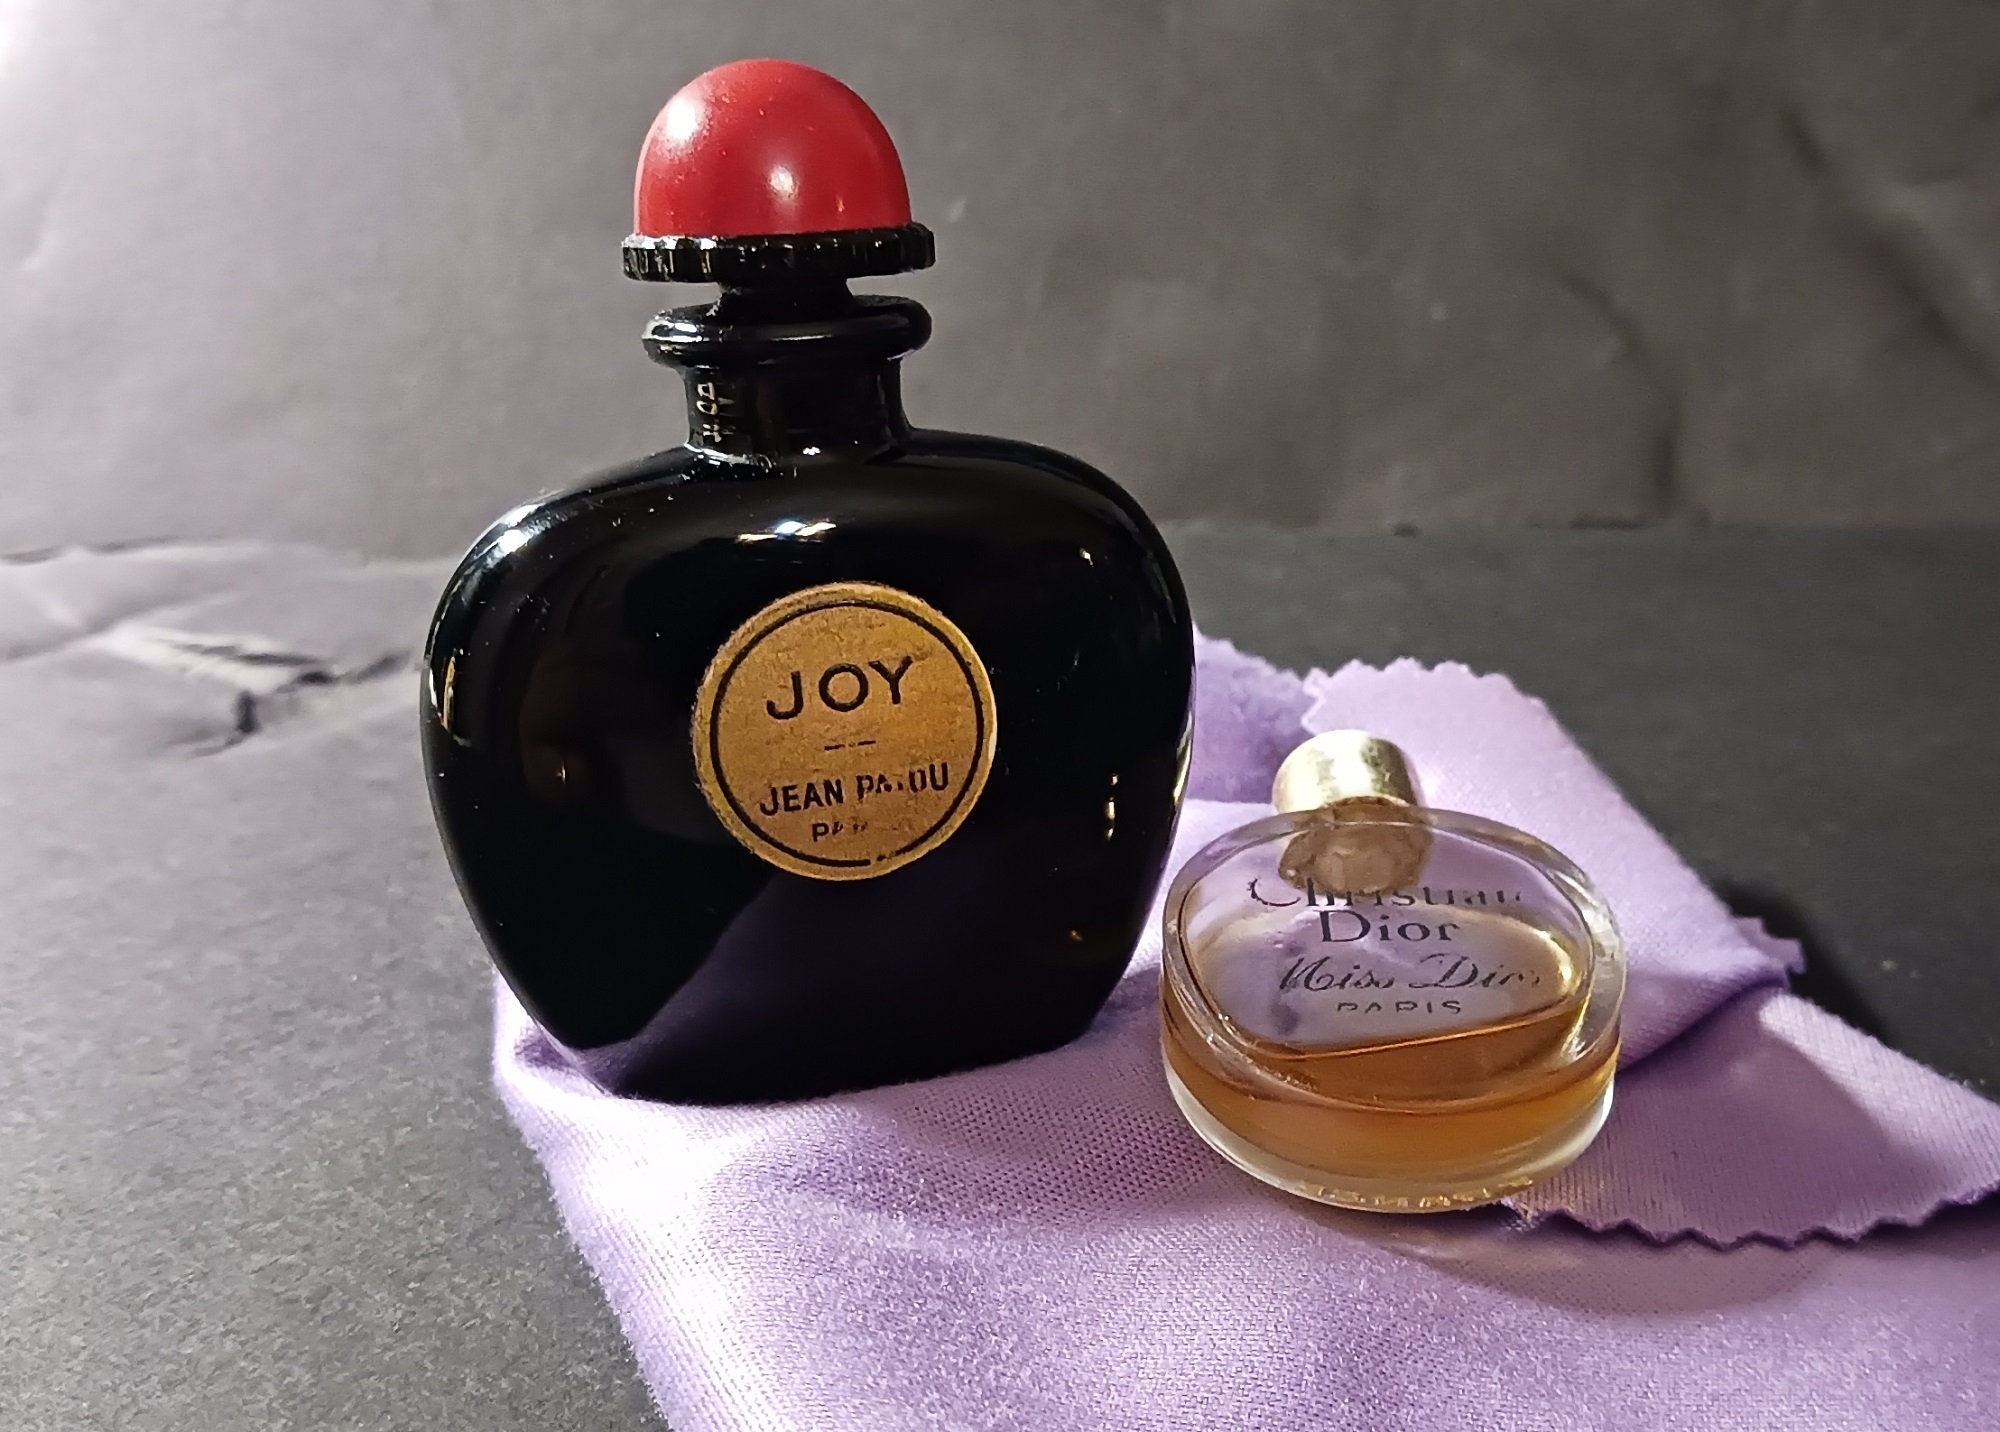 Buy Miss Dior Dior Eau de Cologne 112 ml. Online – My old perfume